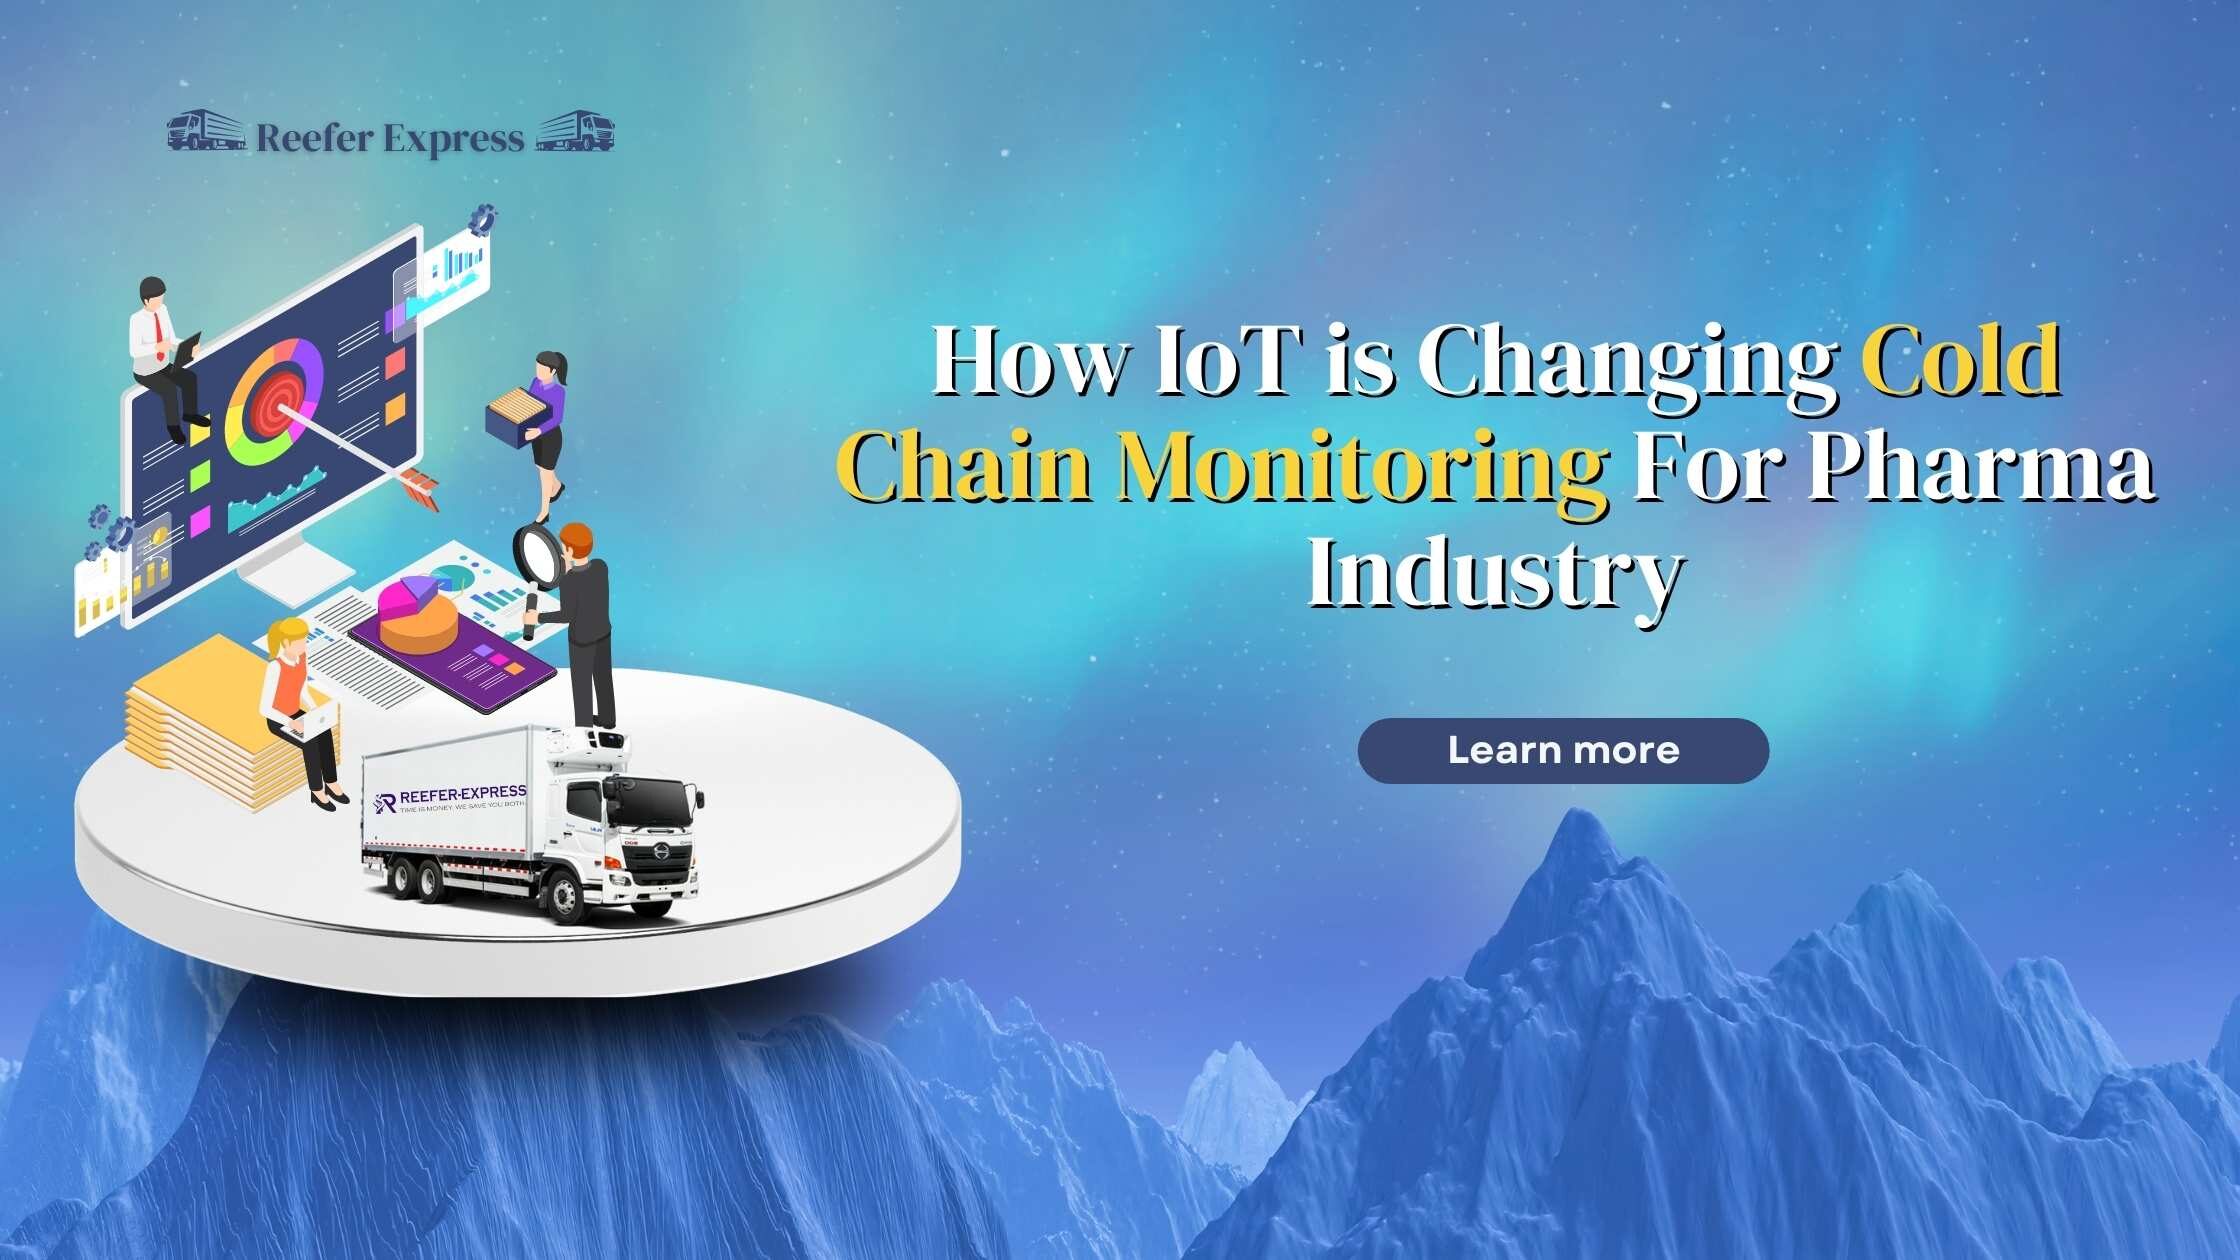 Cold chain monitoring